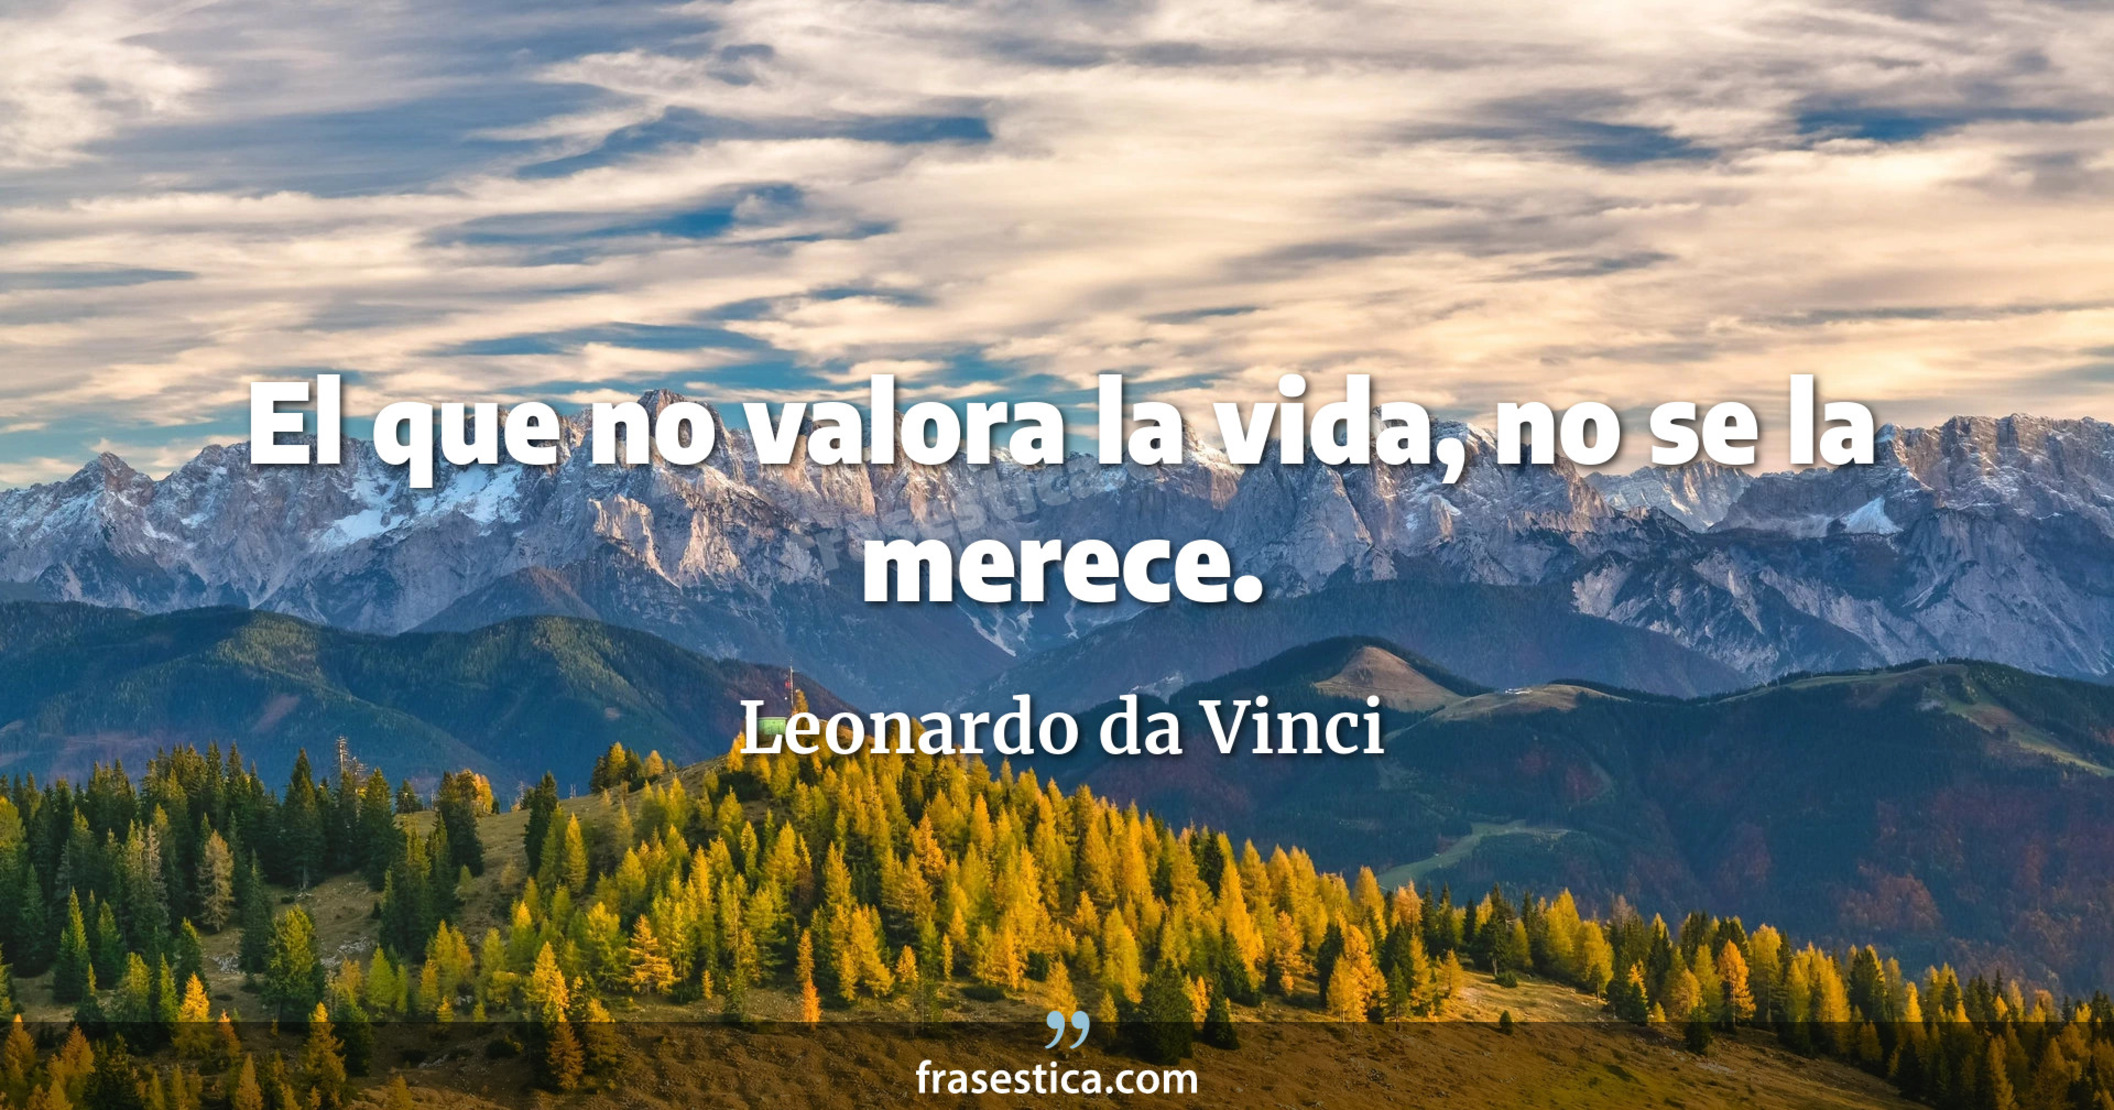 El que no valora la vida, no se la merece. - Leonardo da Vinci